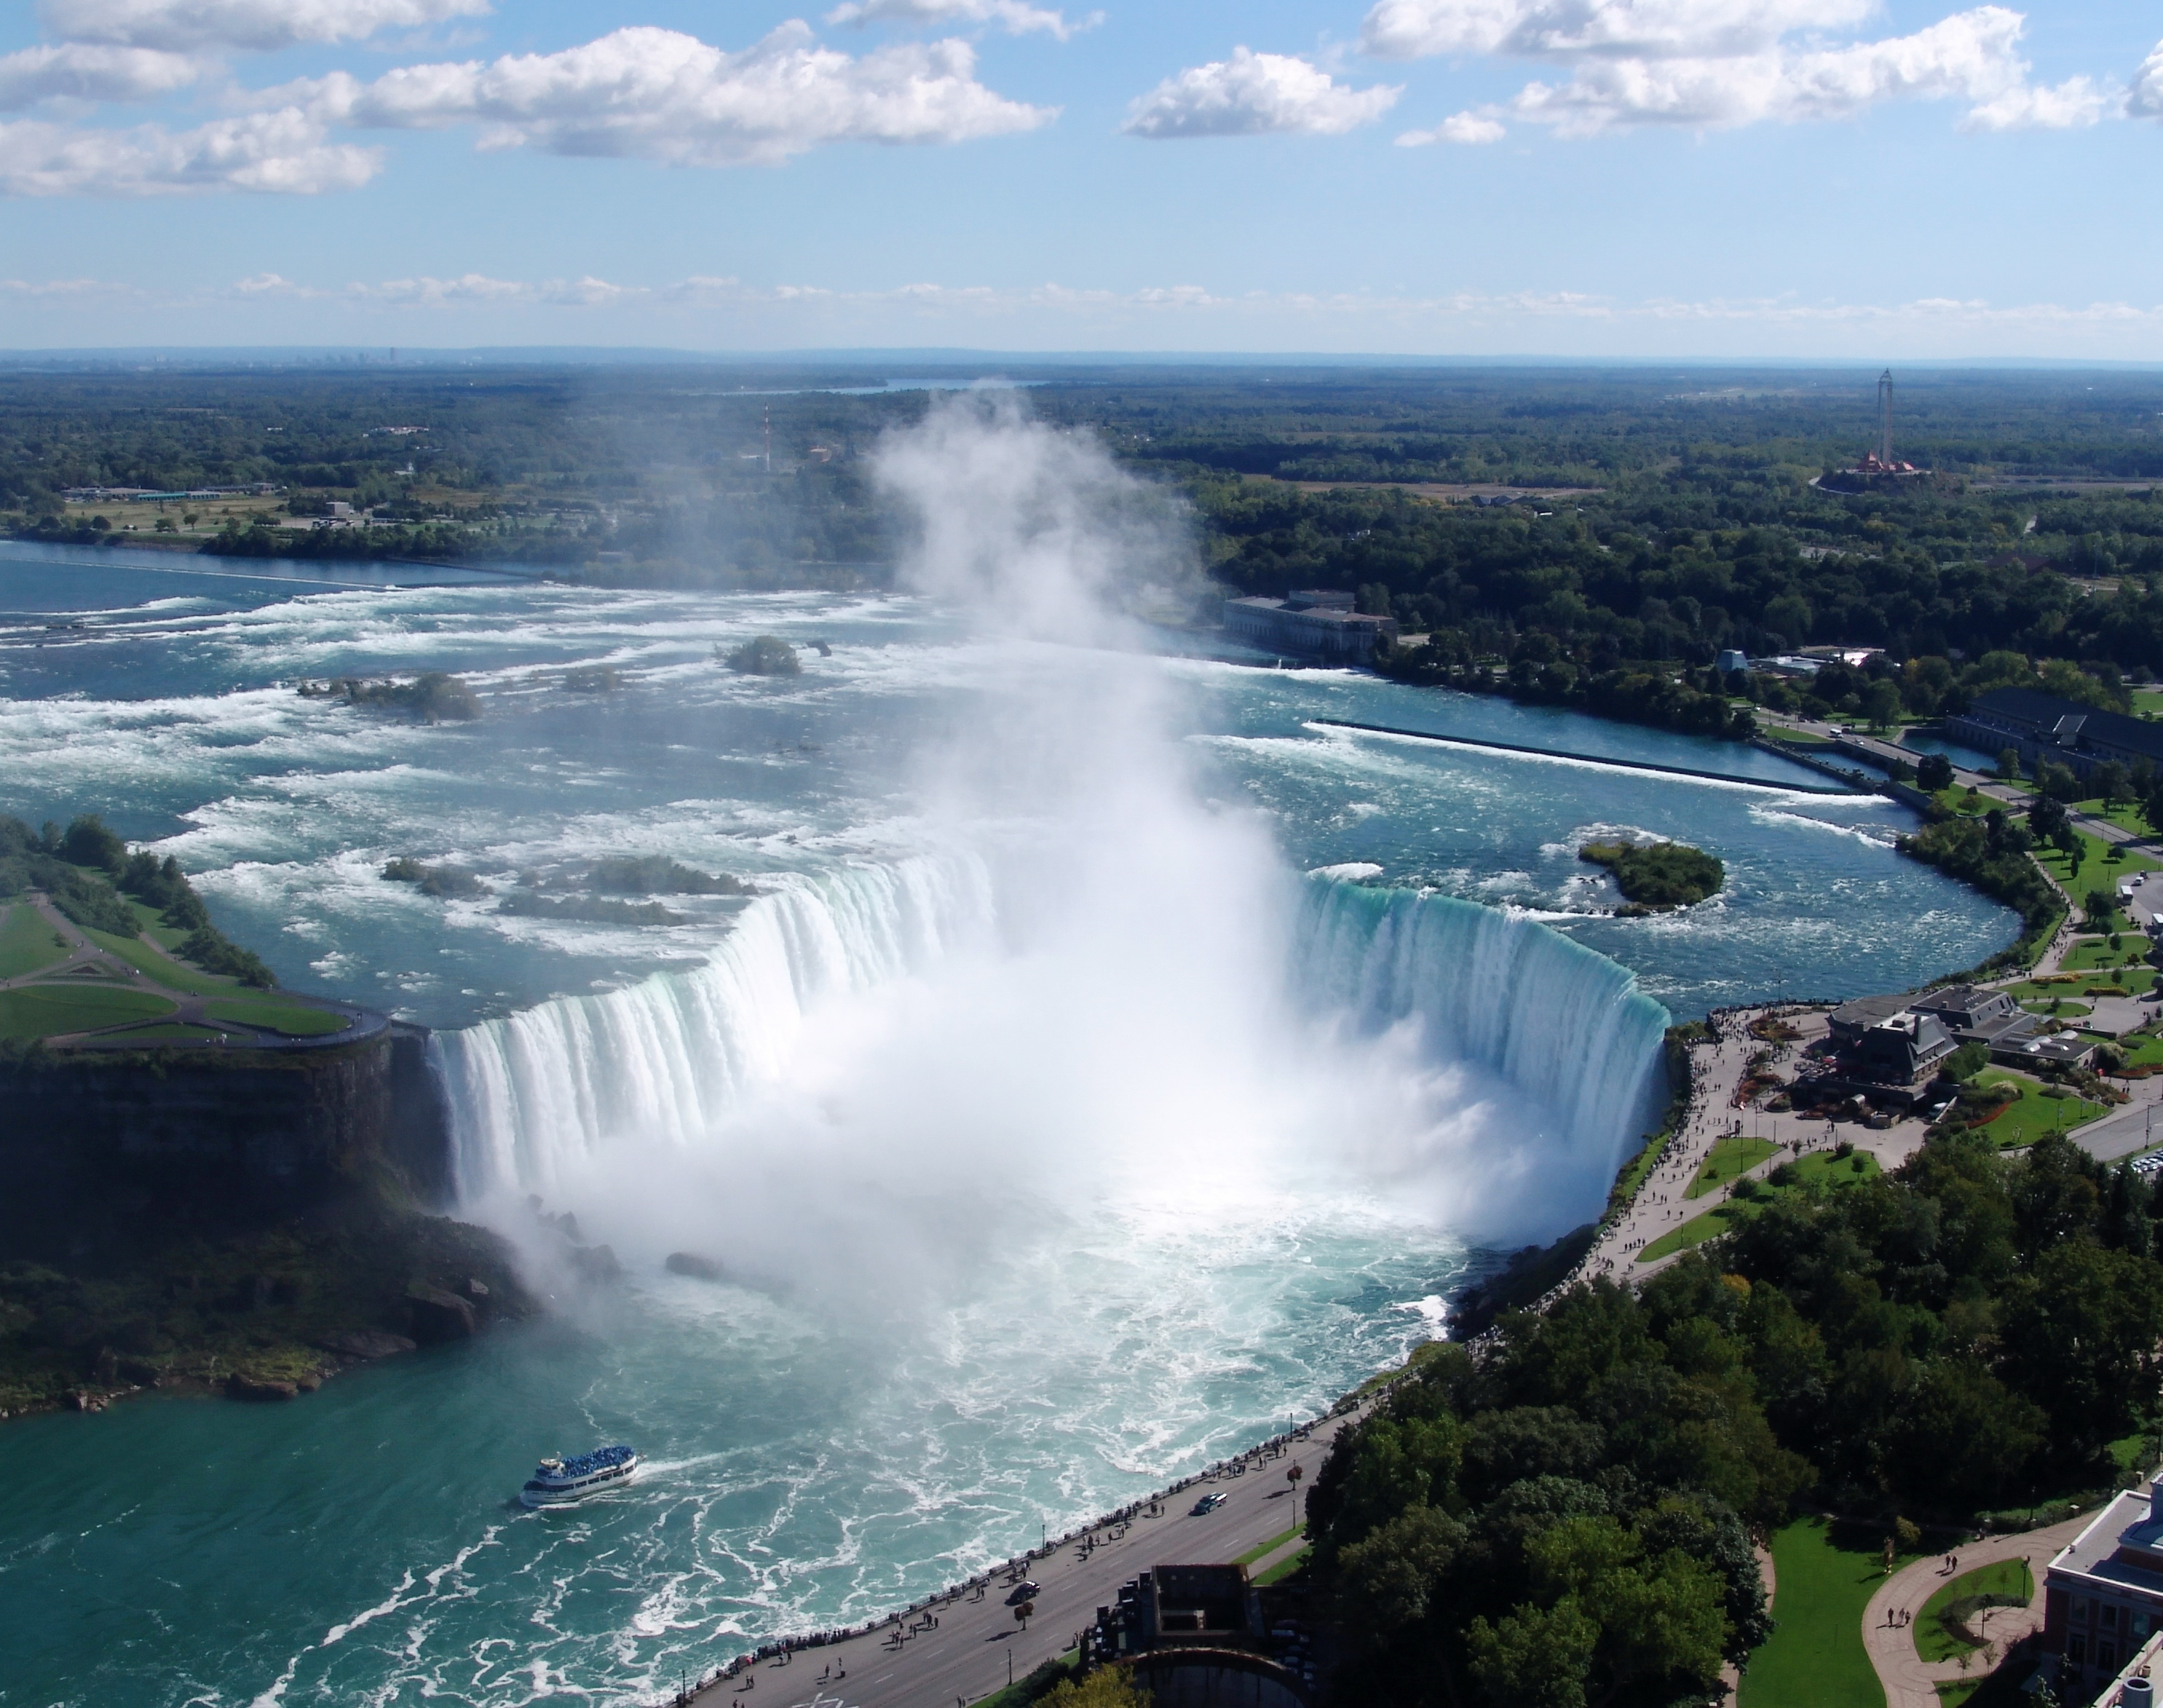 File:Niagara-Falls-Horseshoe-Falls-view.jpg - Wikimedia Commons